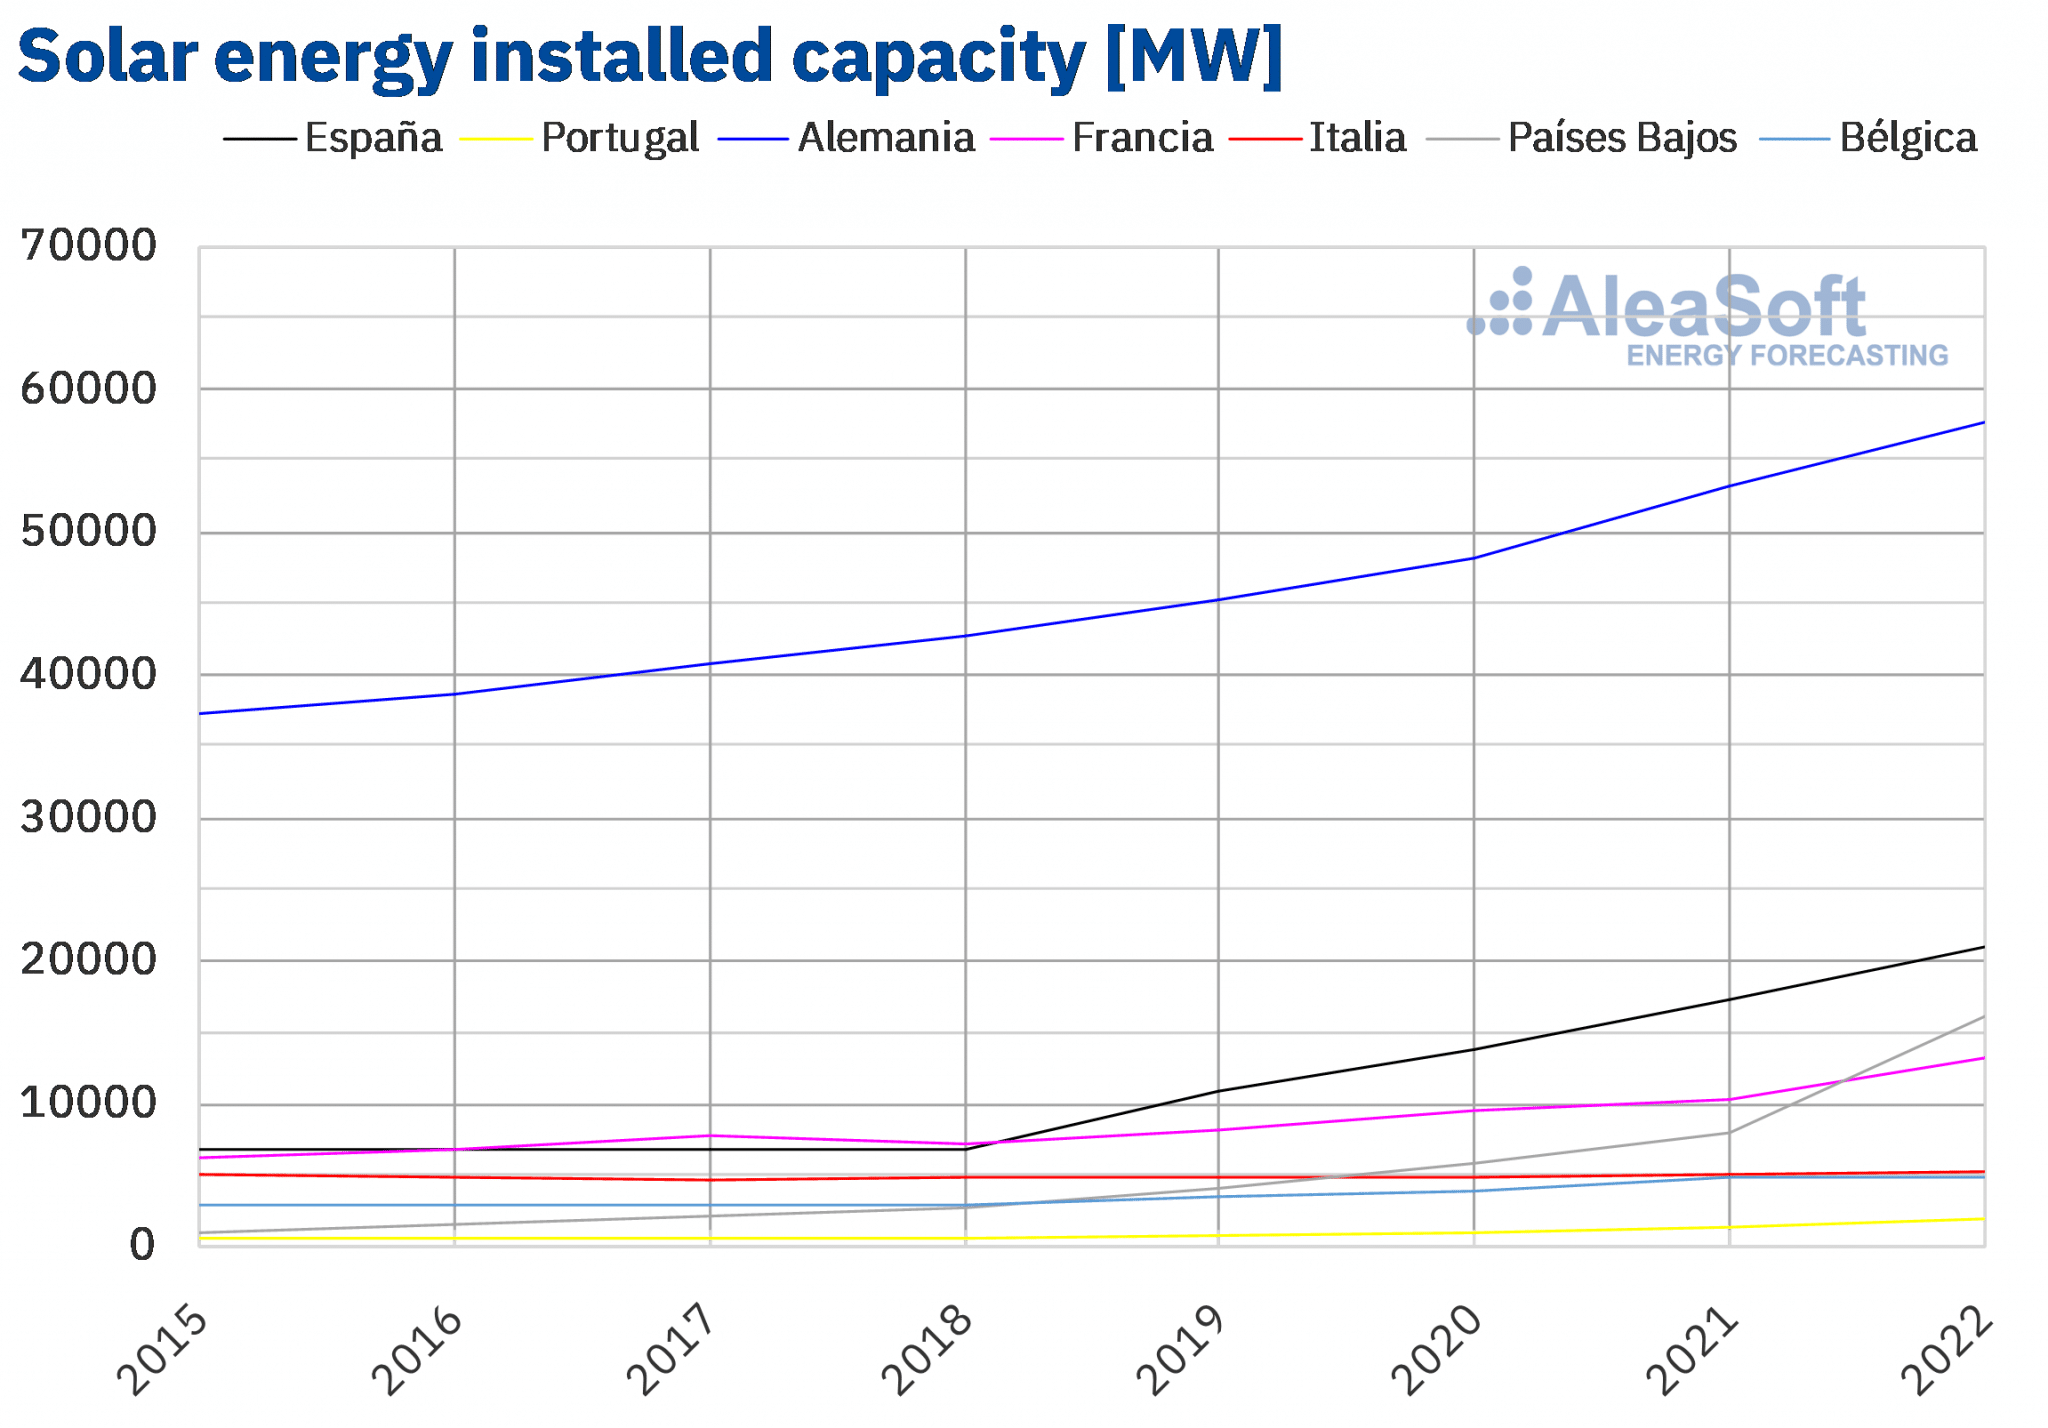 AleaSoft - solar energy installed capacity